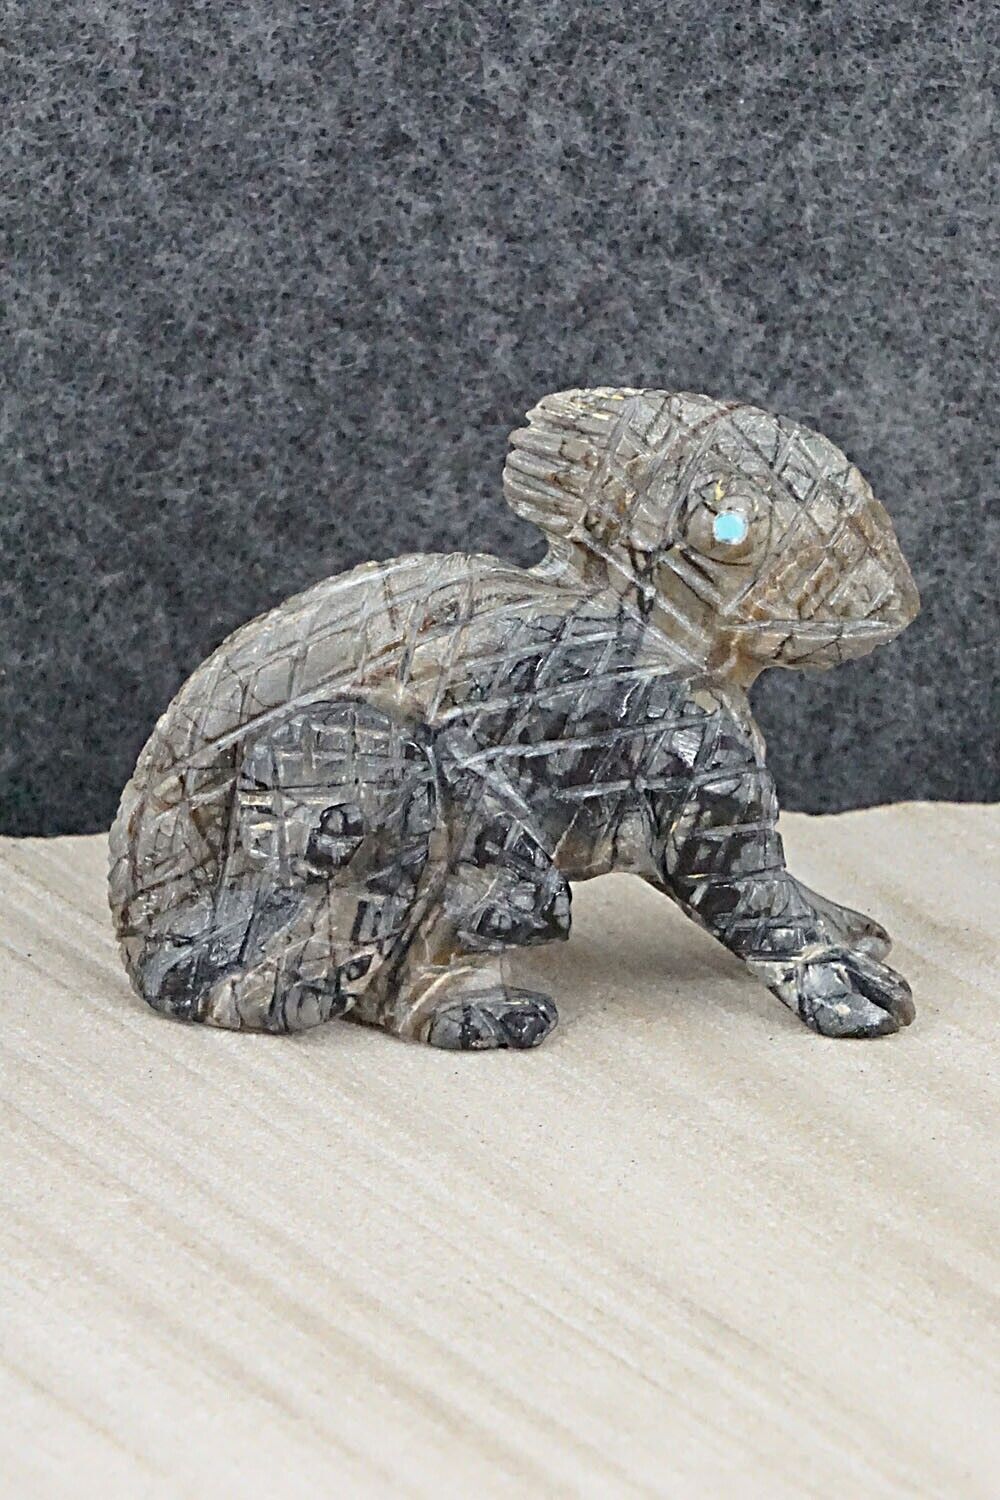 Chameleon Zuni Fetish Carving - Wilfred Cheama